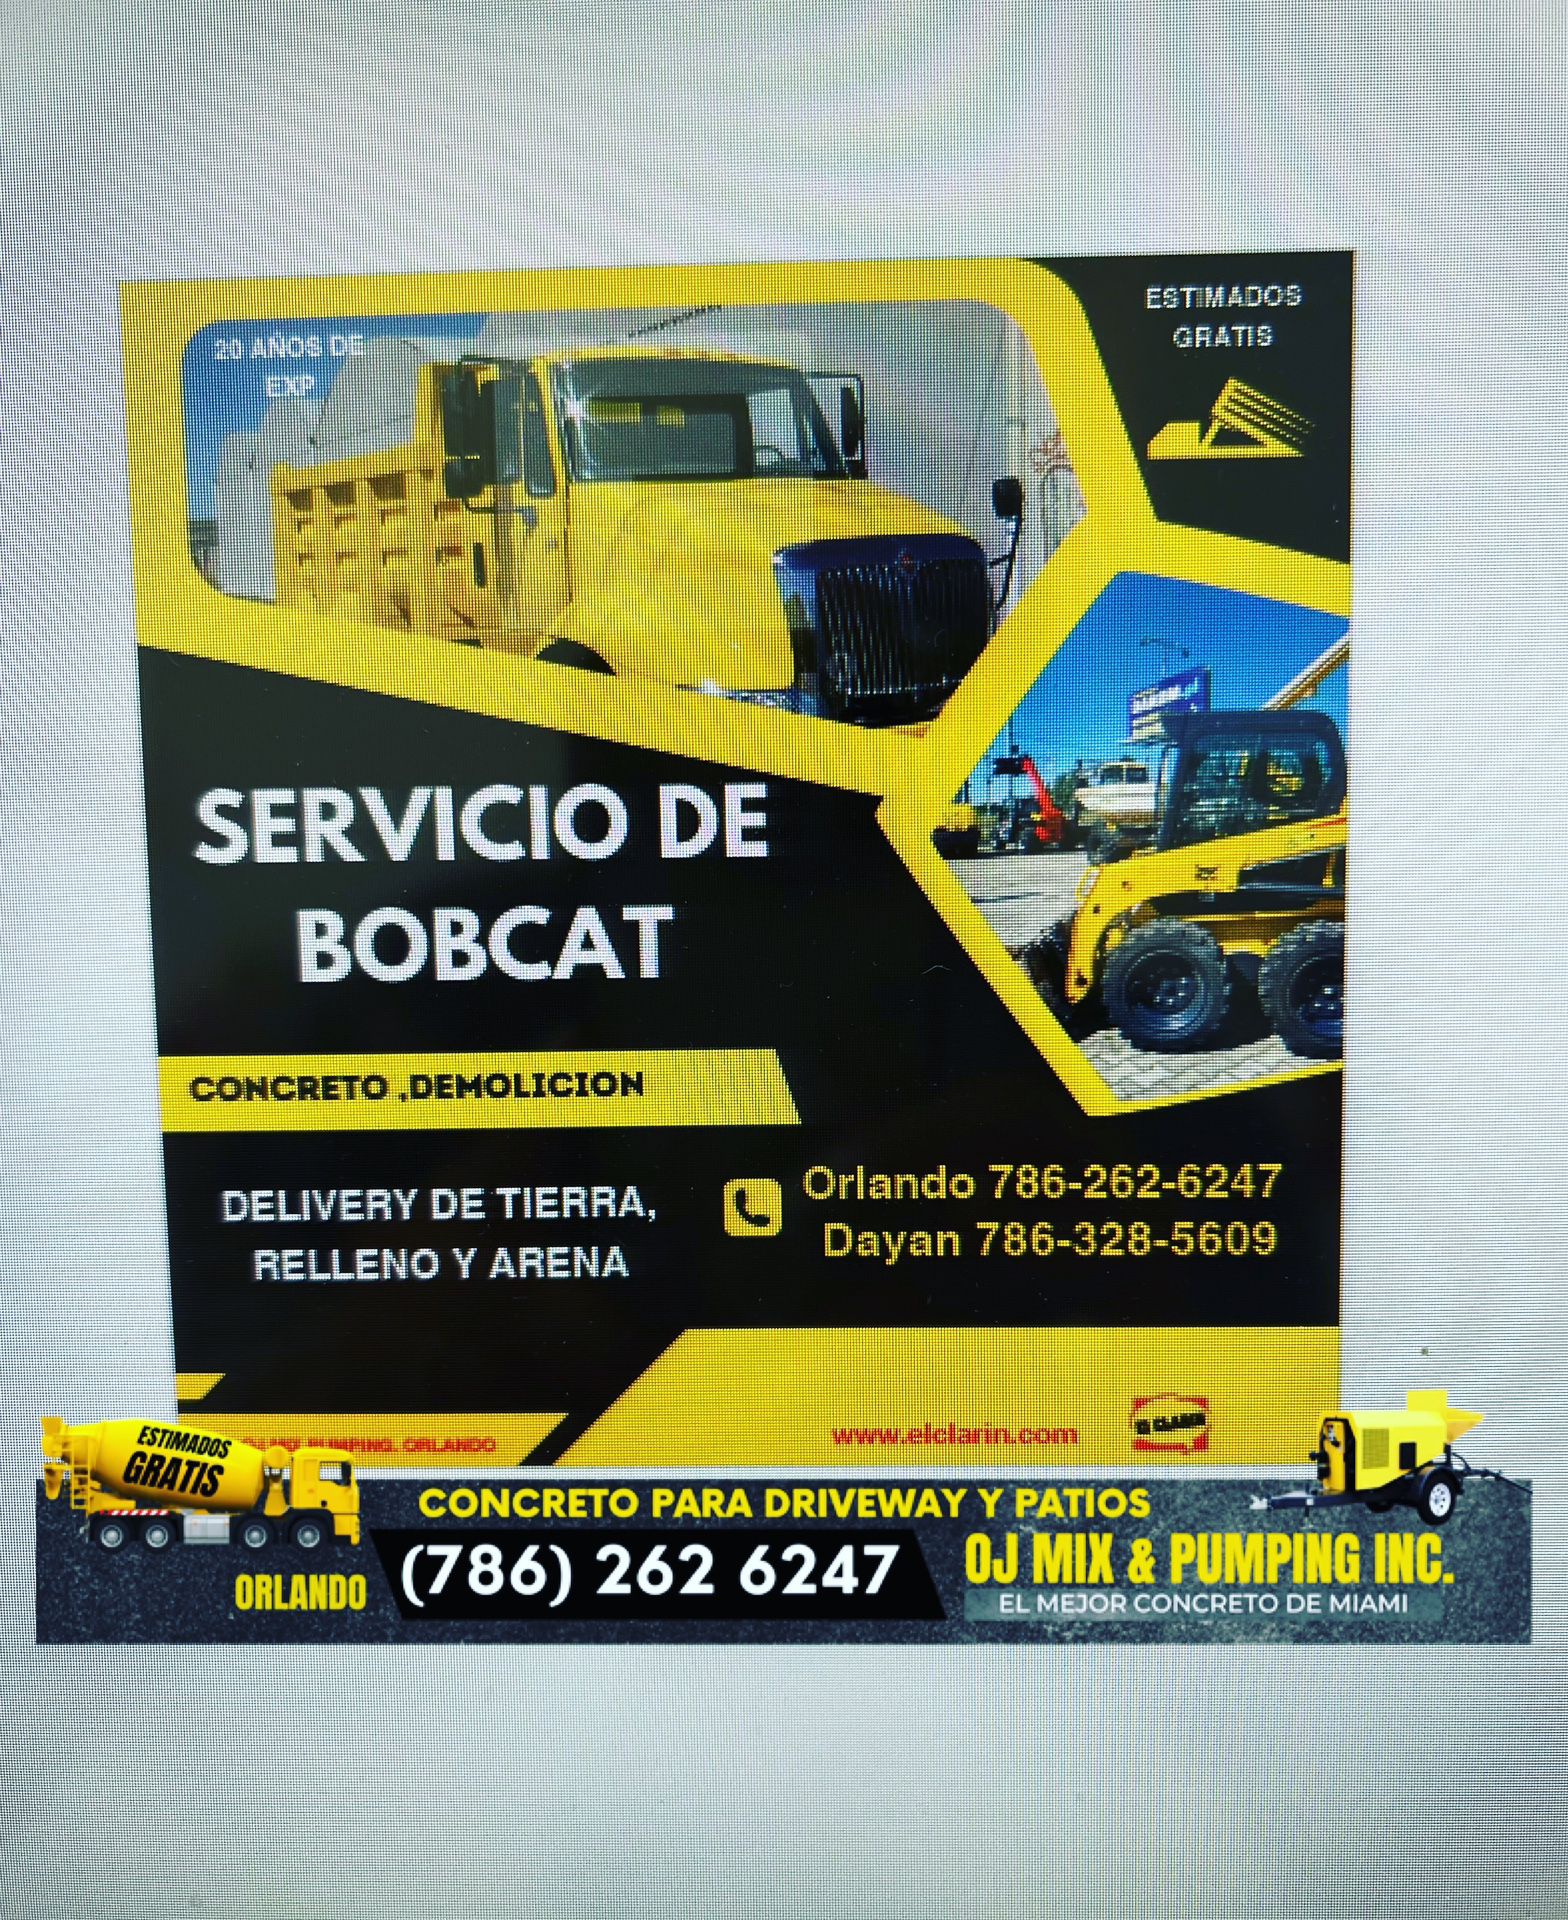 Bobcat Services 